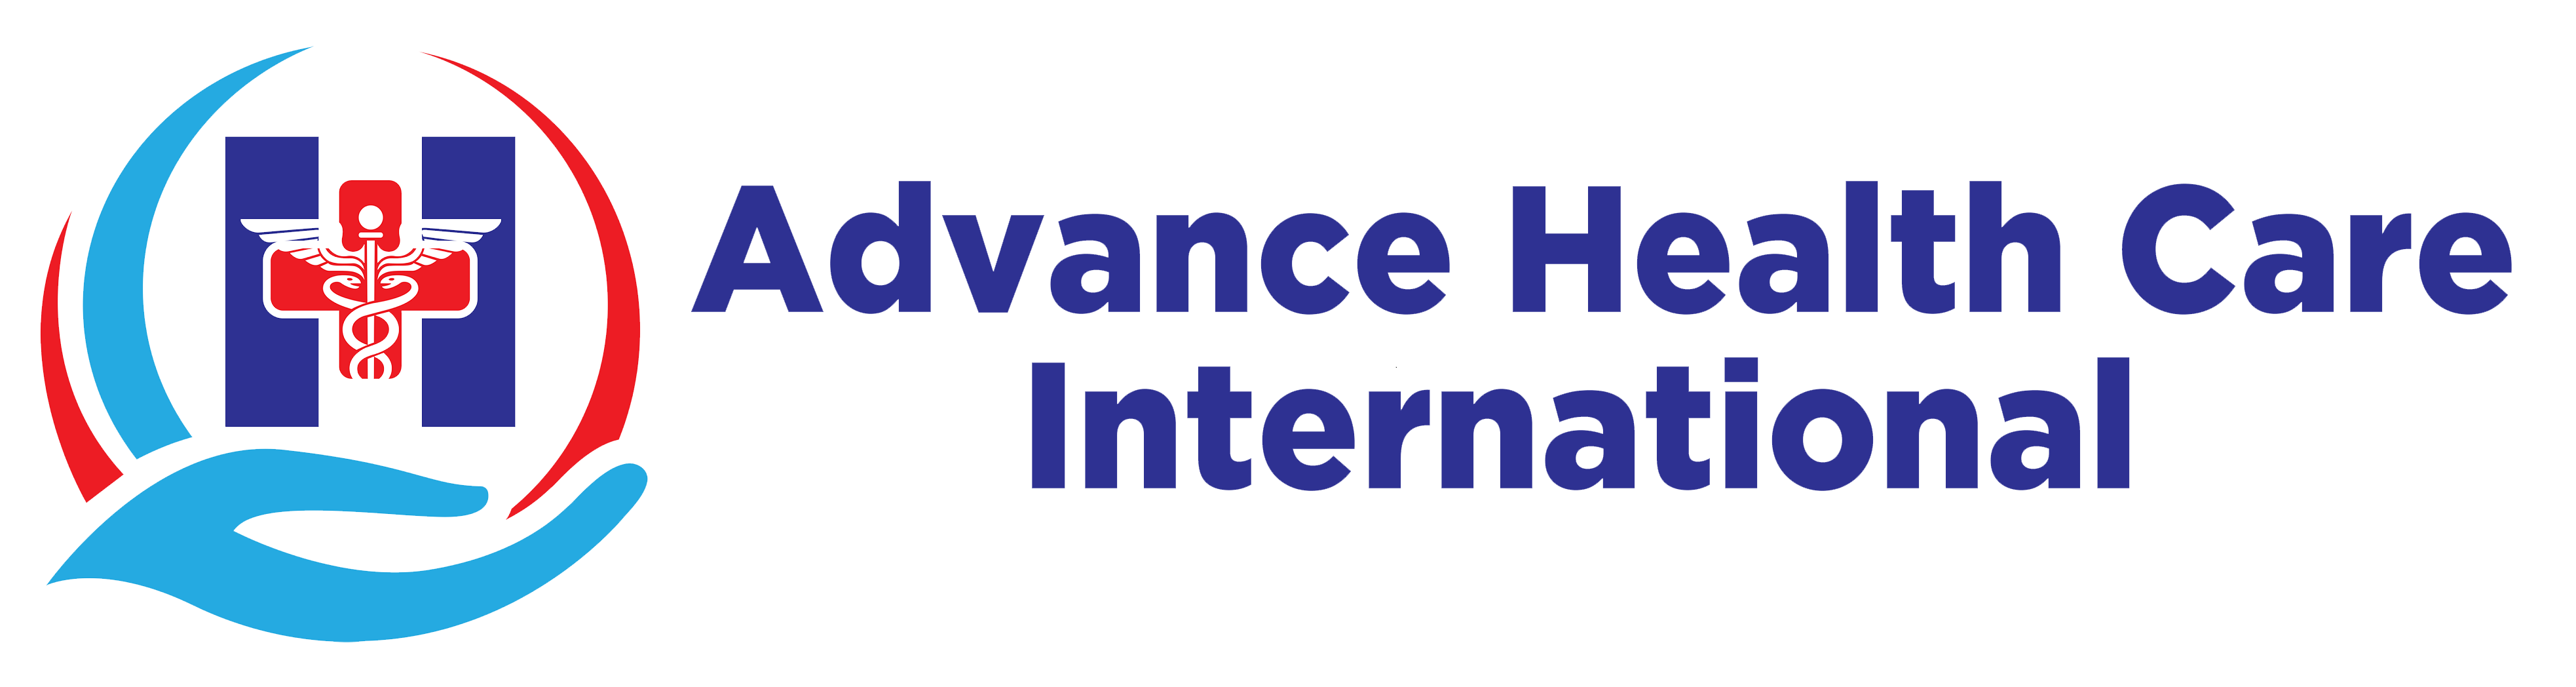 Advance Health Care International